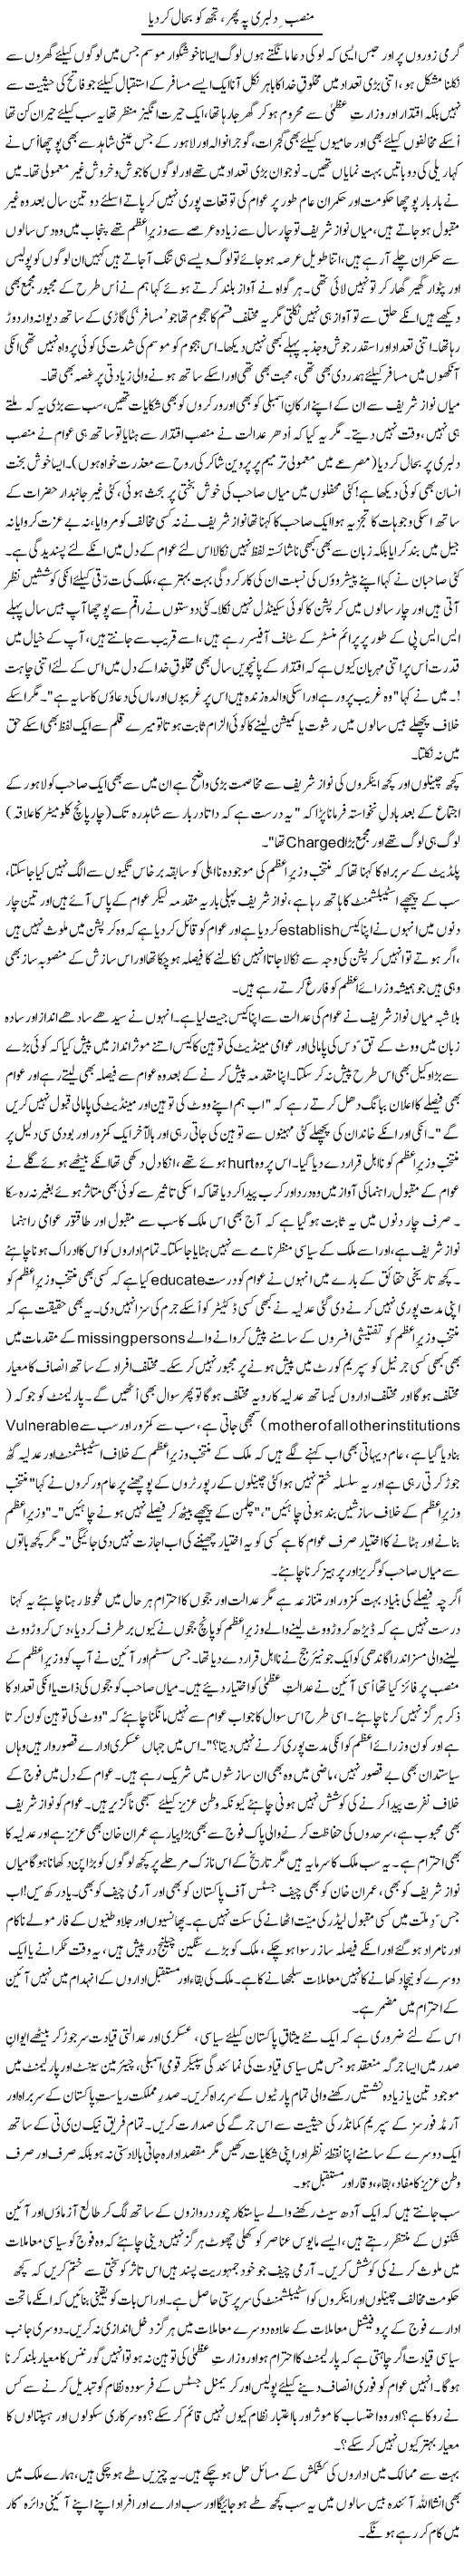 Mansab Dilbari Pe Phir, Tujh Ko Bahaal Kar Diya | Zulfiqar Ahmed Cheema | Daily Urdu Columns